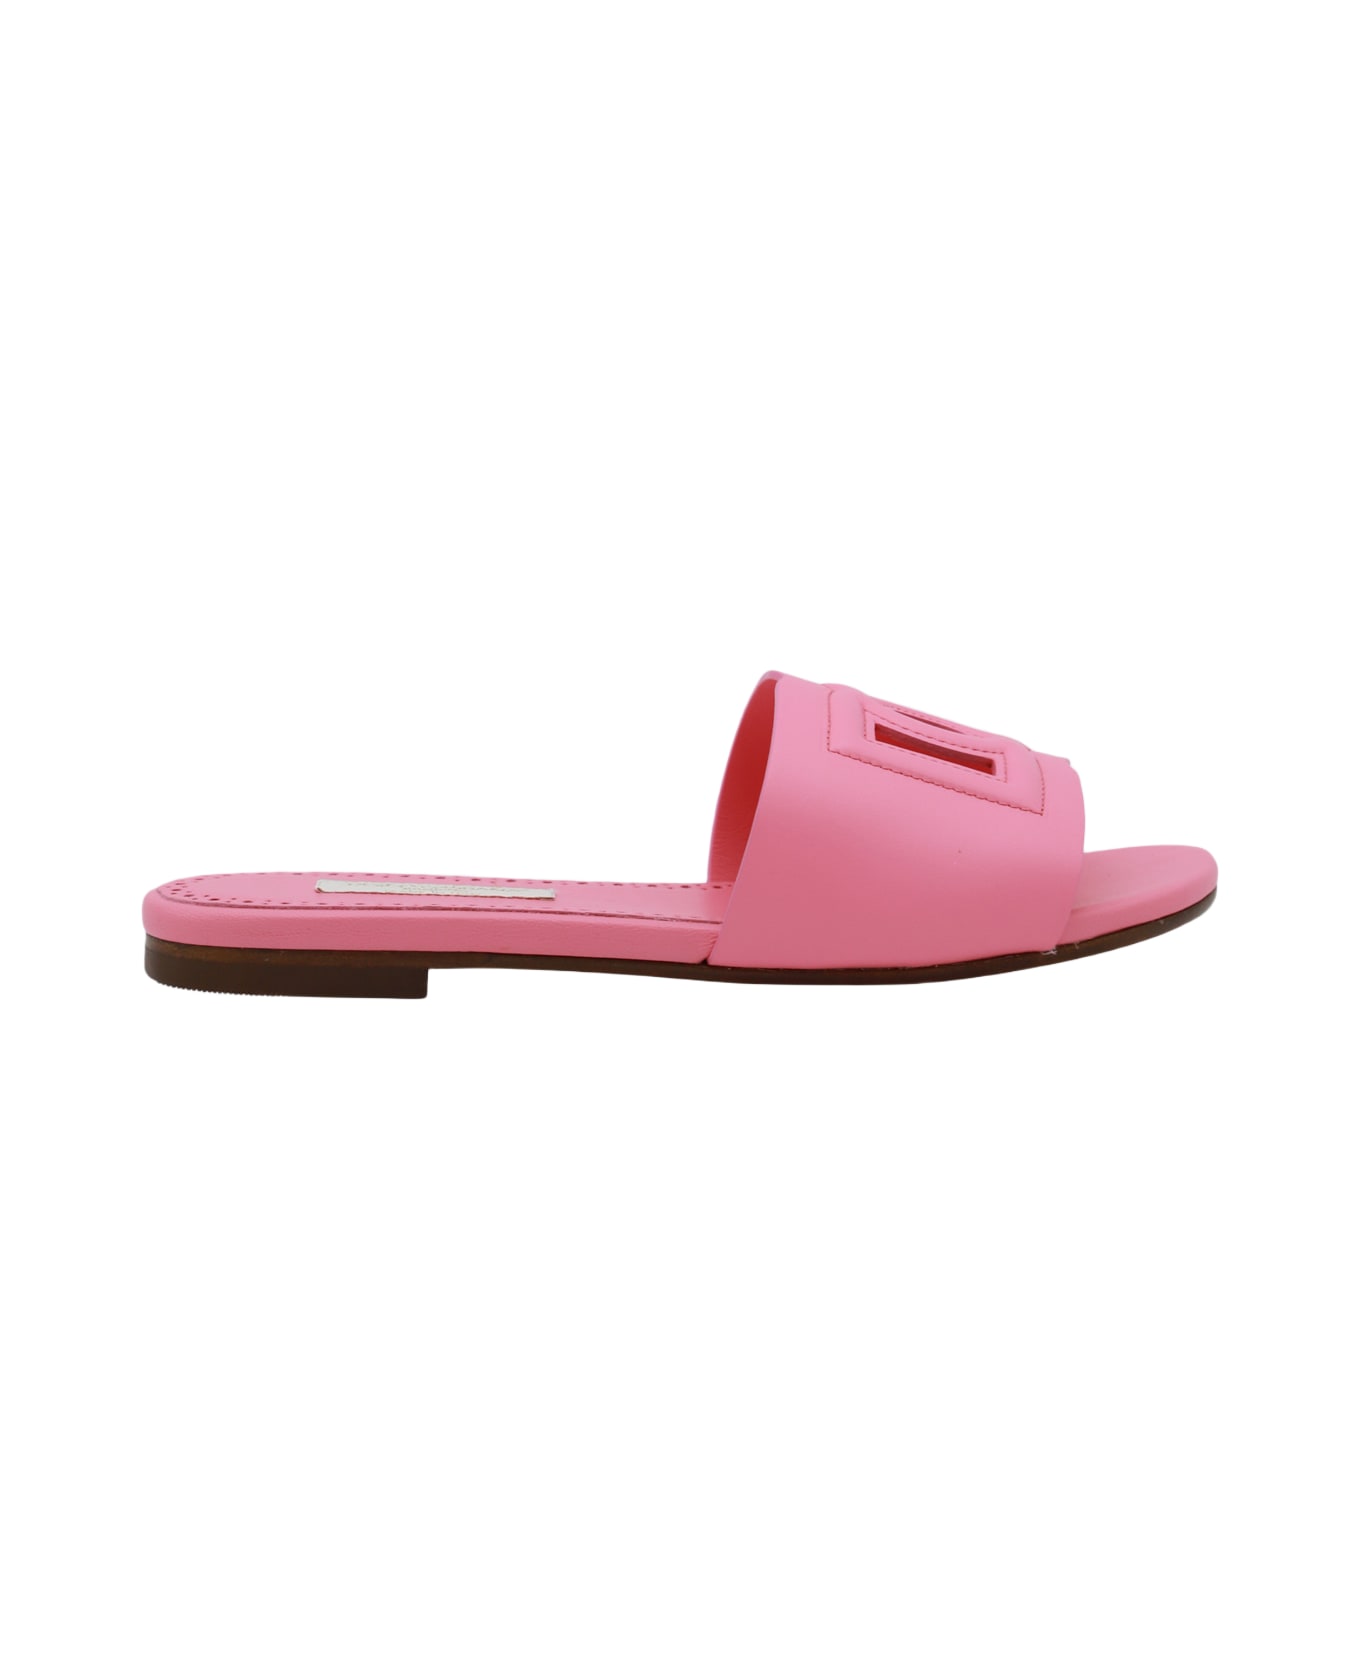 Dolce & Gabbana Pink Leather Dg Logo Flats - ROSA MEDIO シューズ